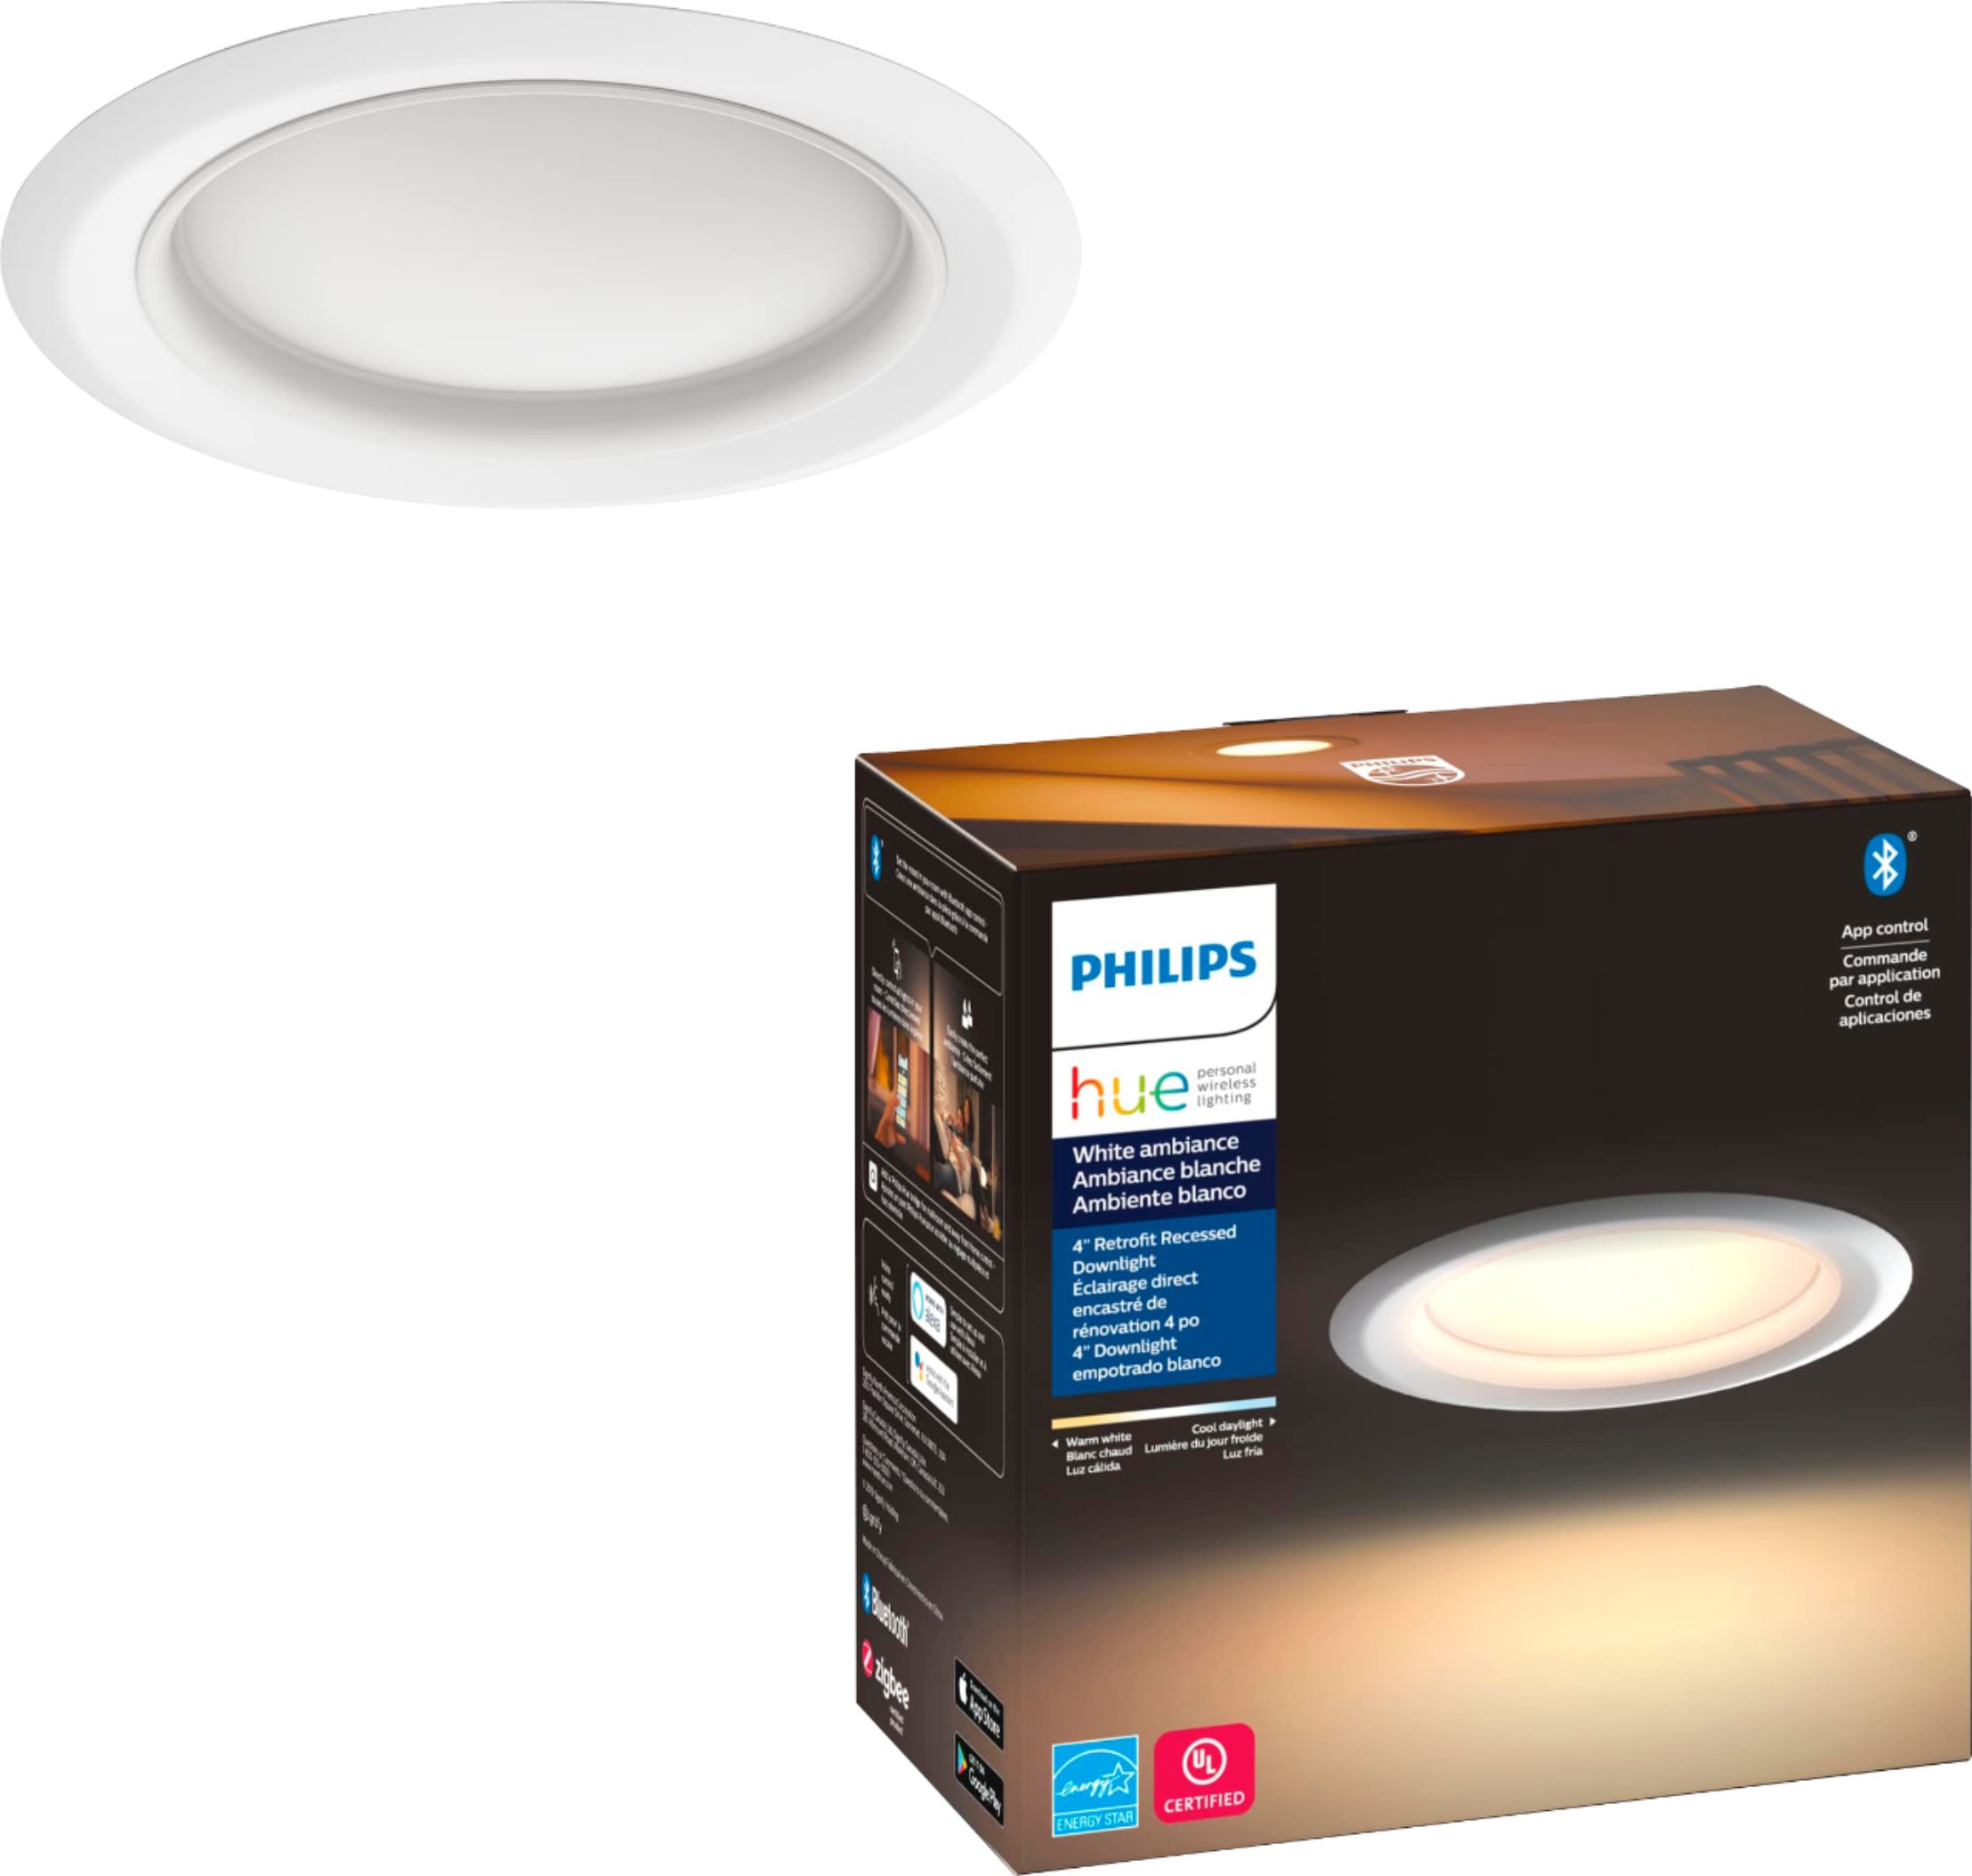 Philips - Hue White Ambiance LED Smart Retrofit 4" Recessed Downlight - White